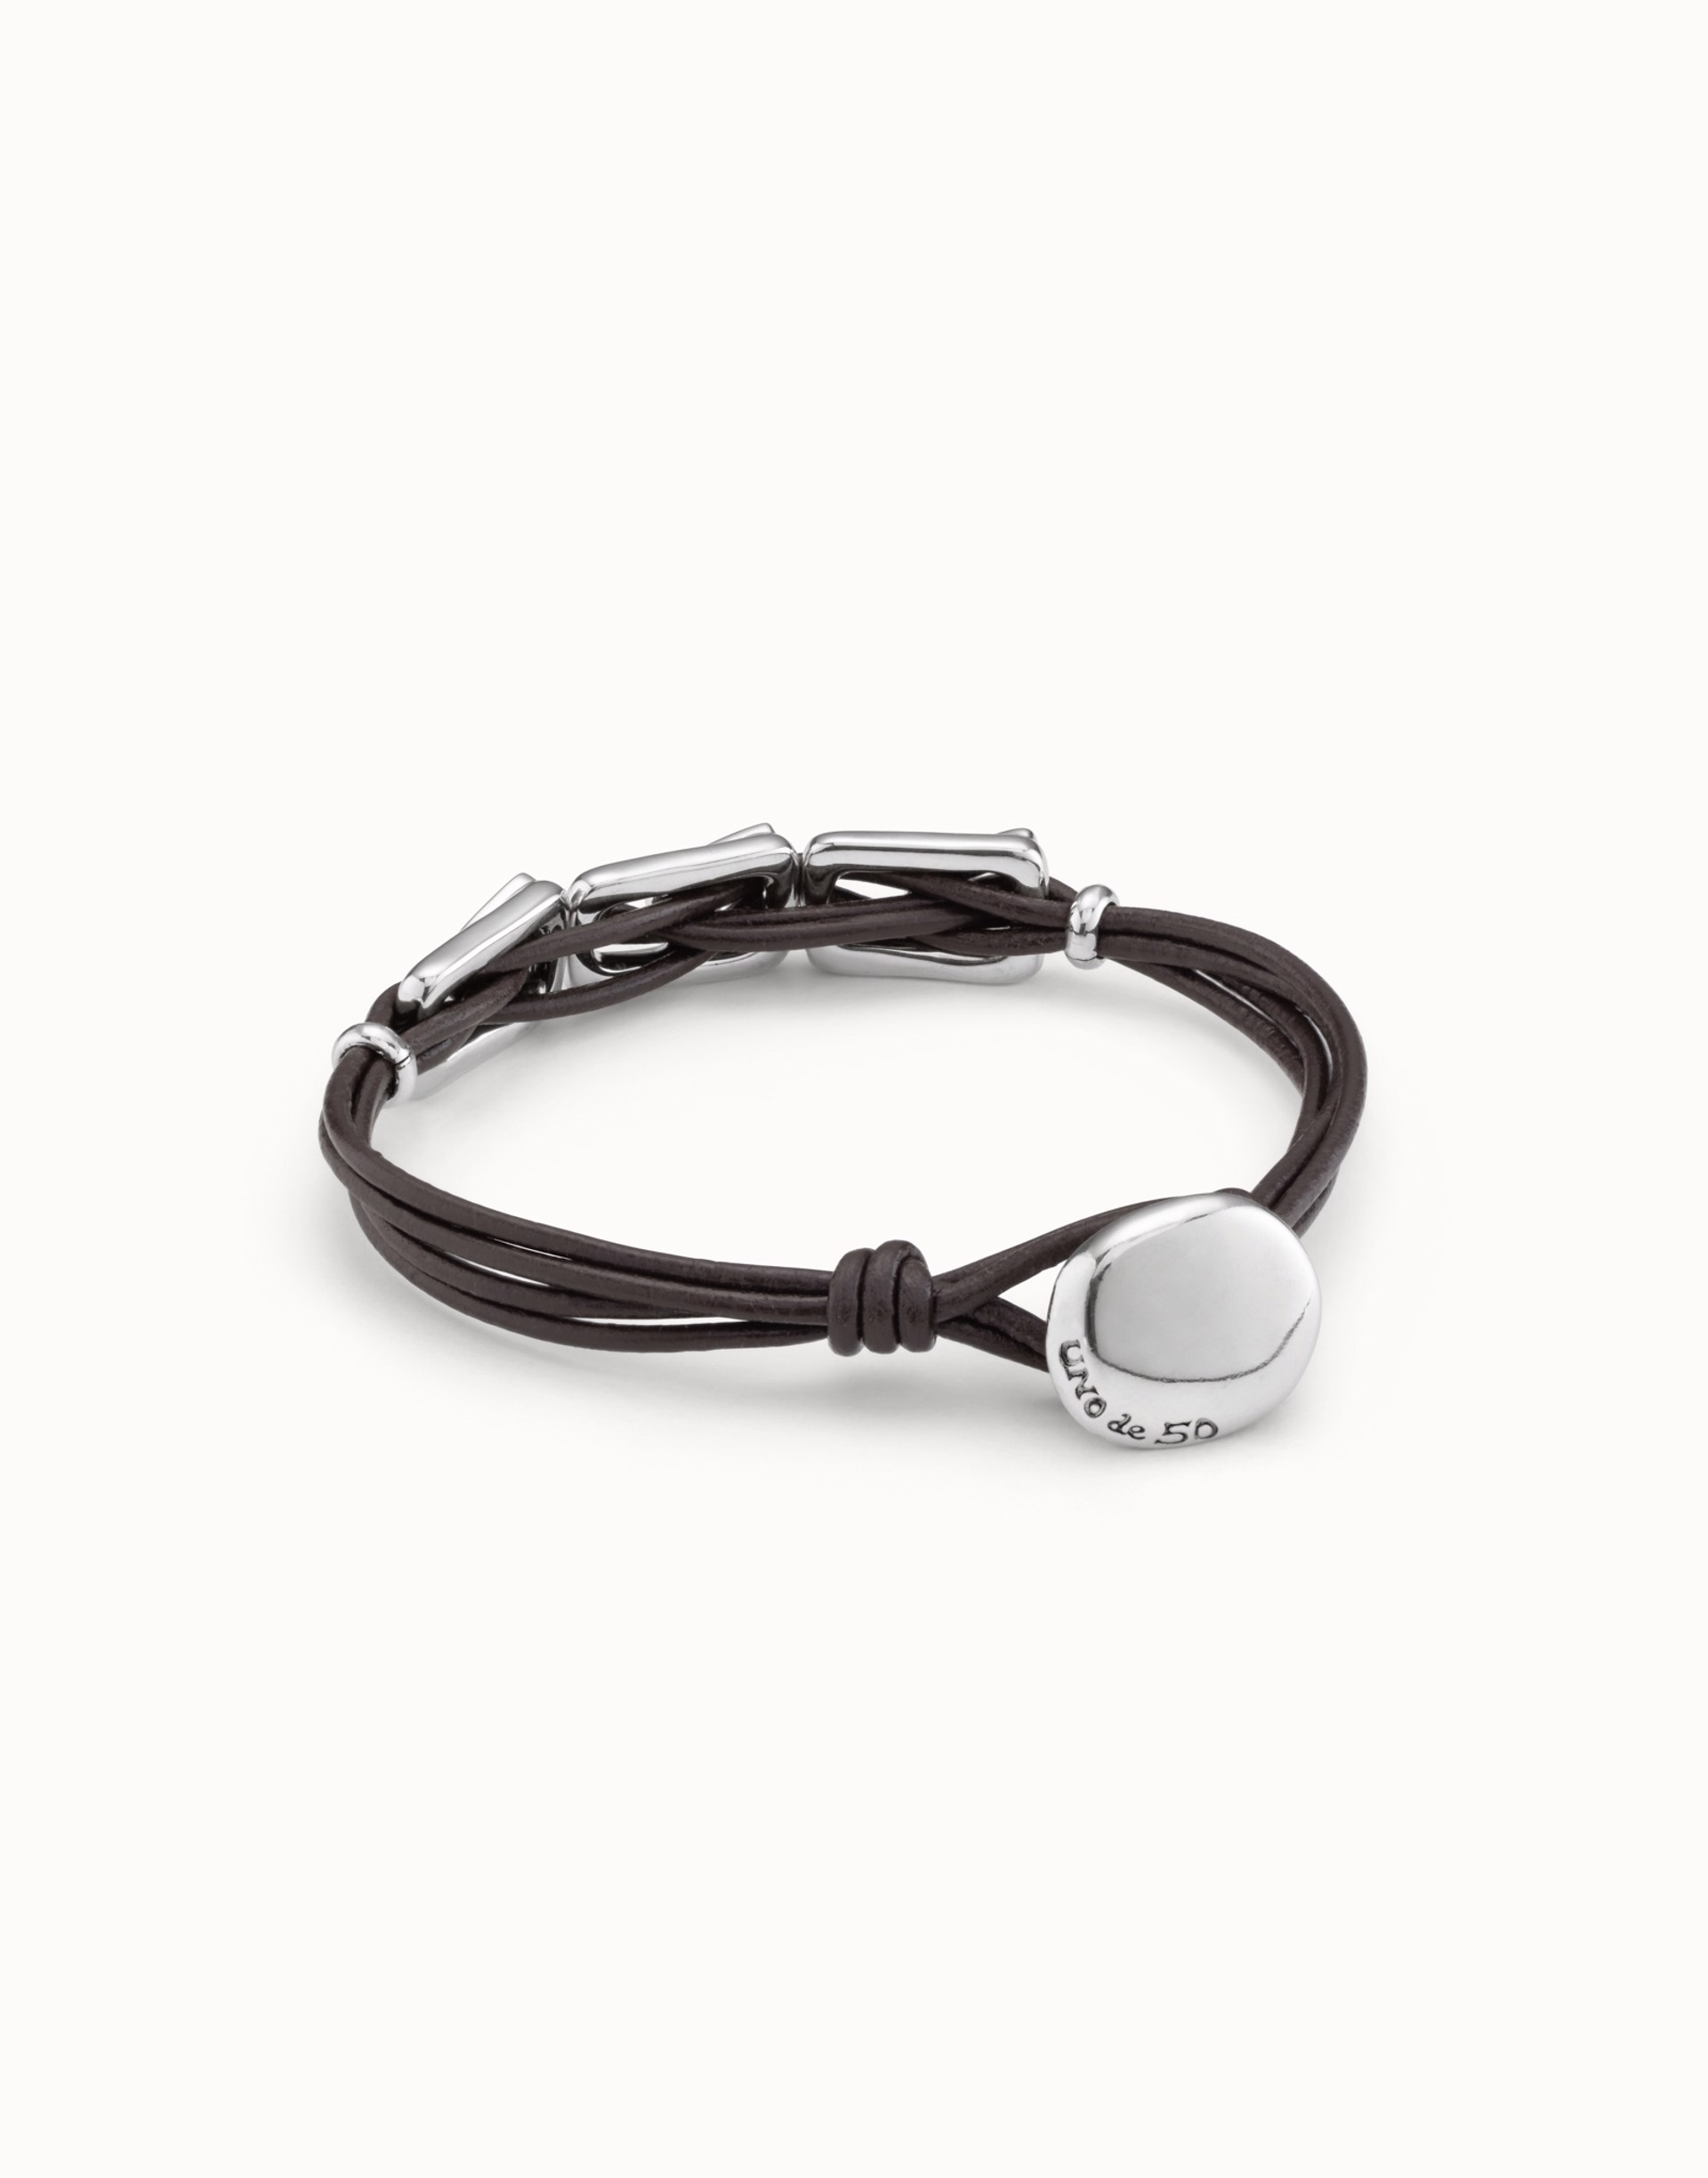 Daring Topaz Bracelet by UNO DE 50